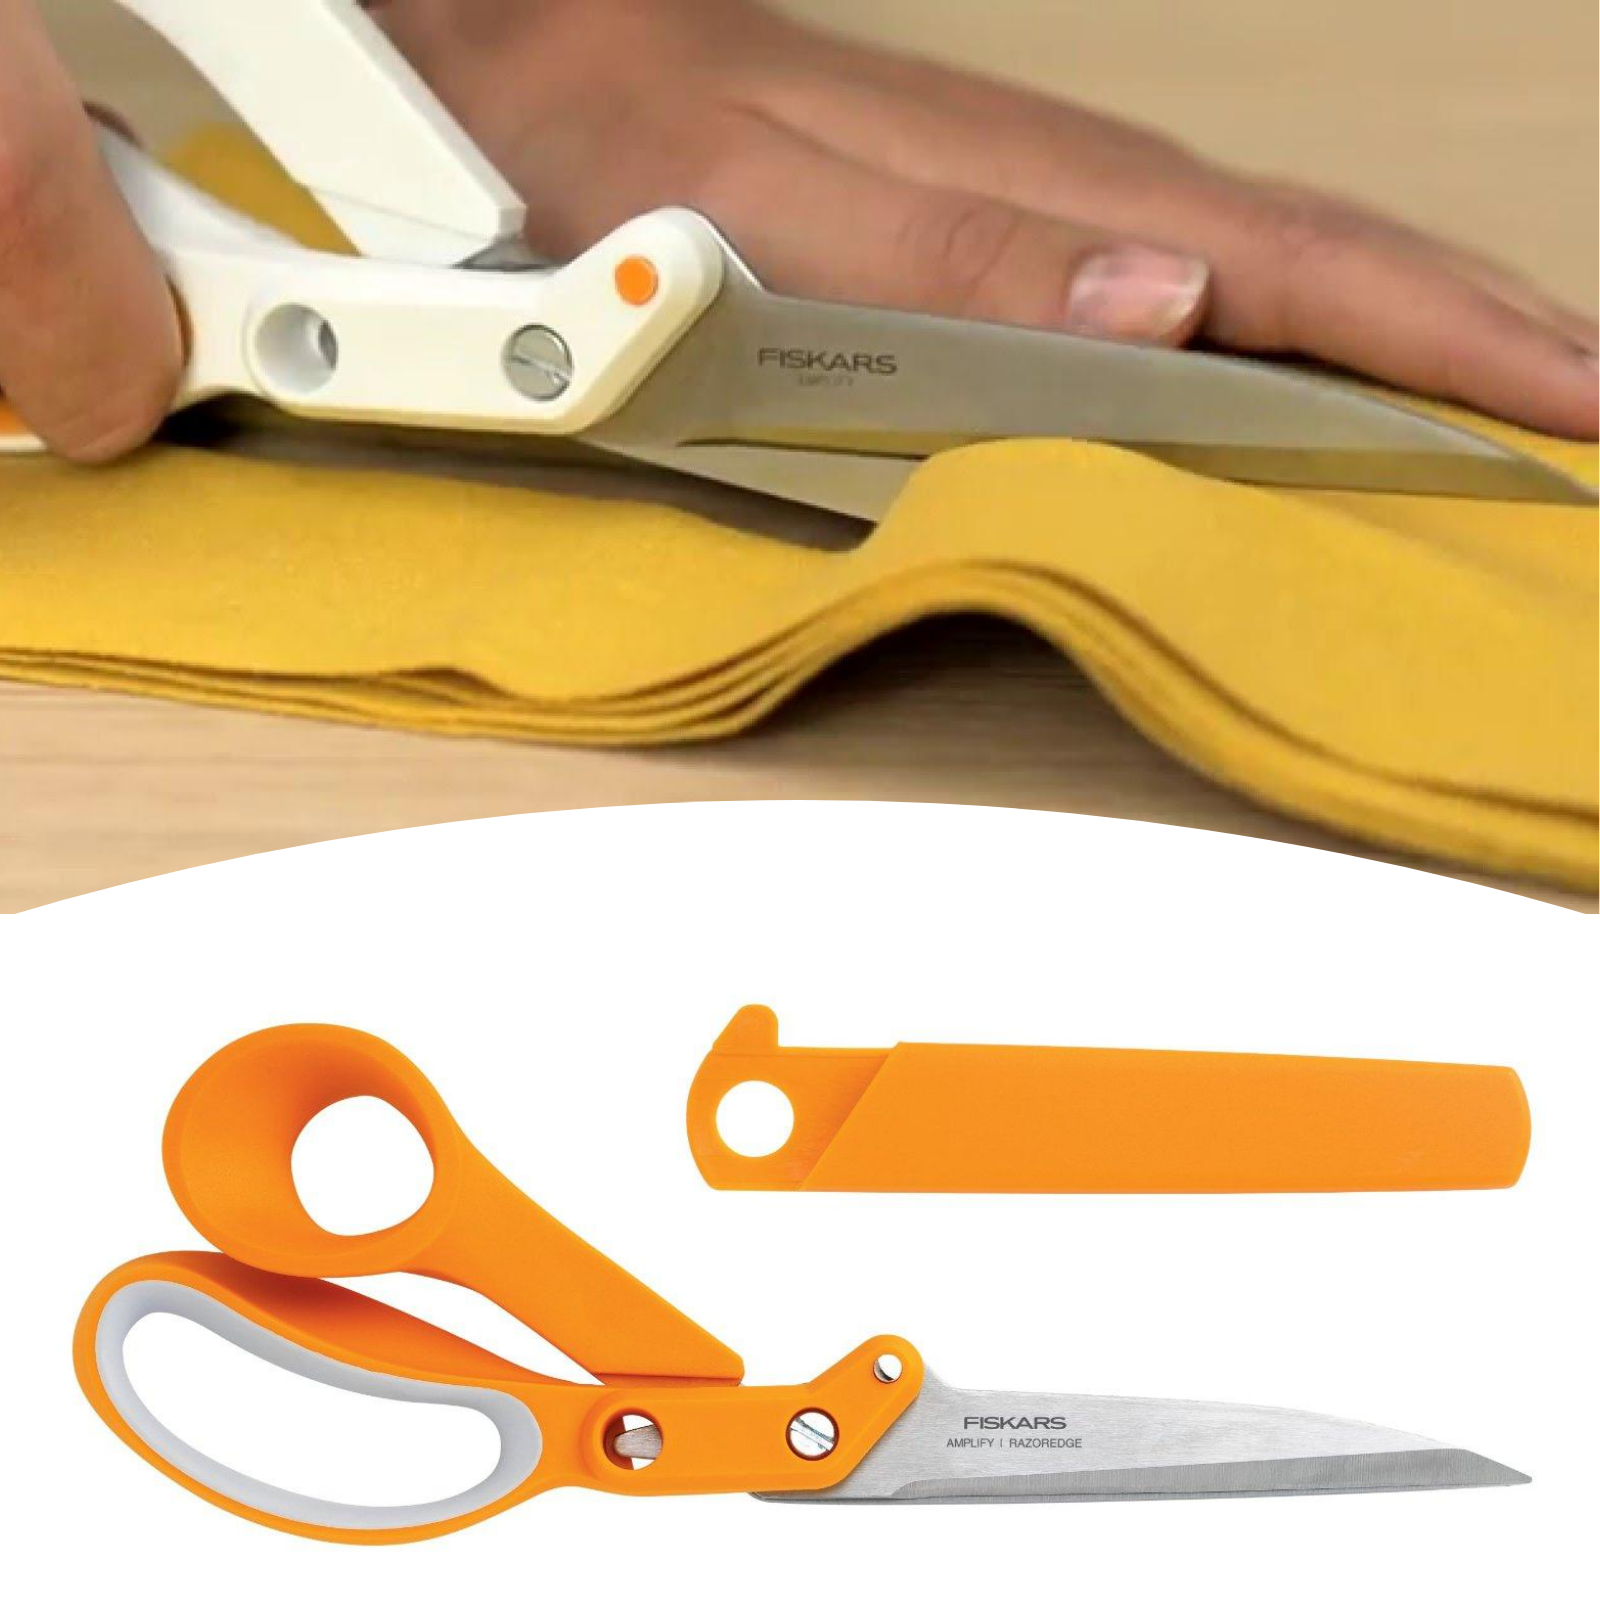 Fiskars Amplify Fabric Shears - Scissors, 8